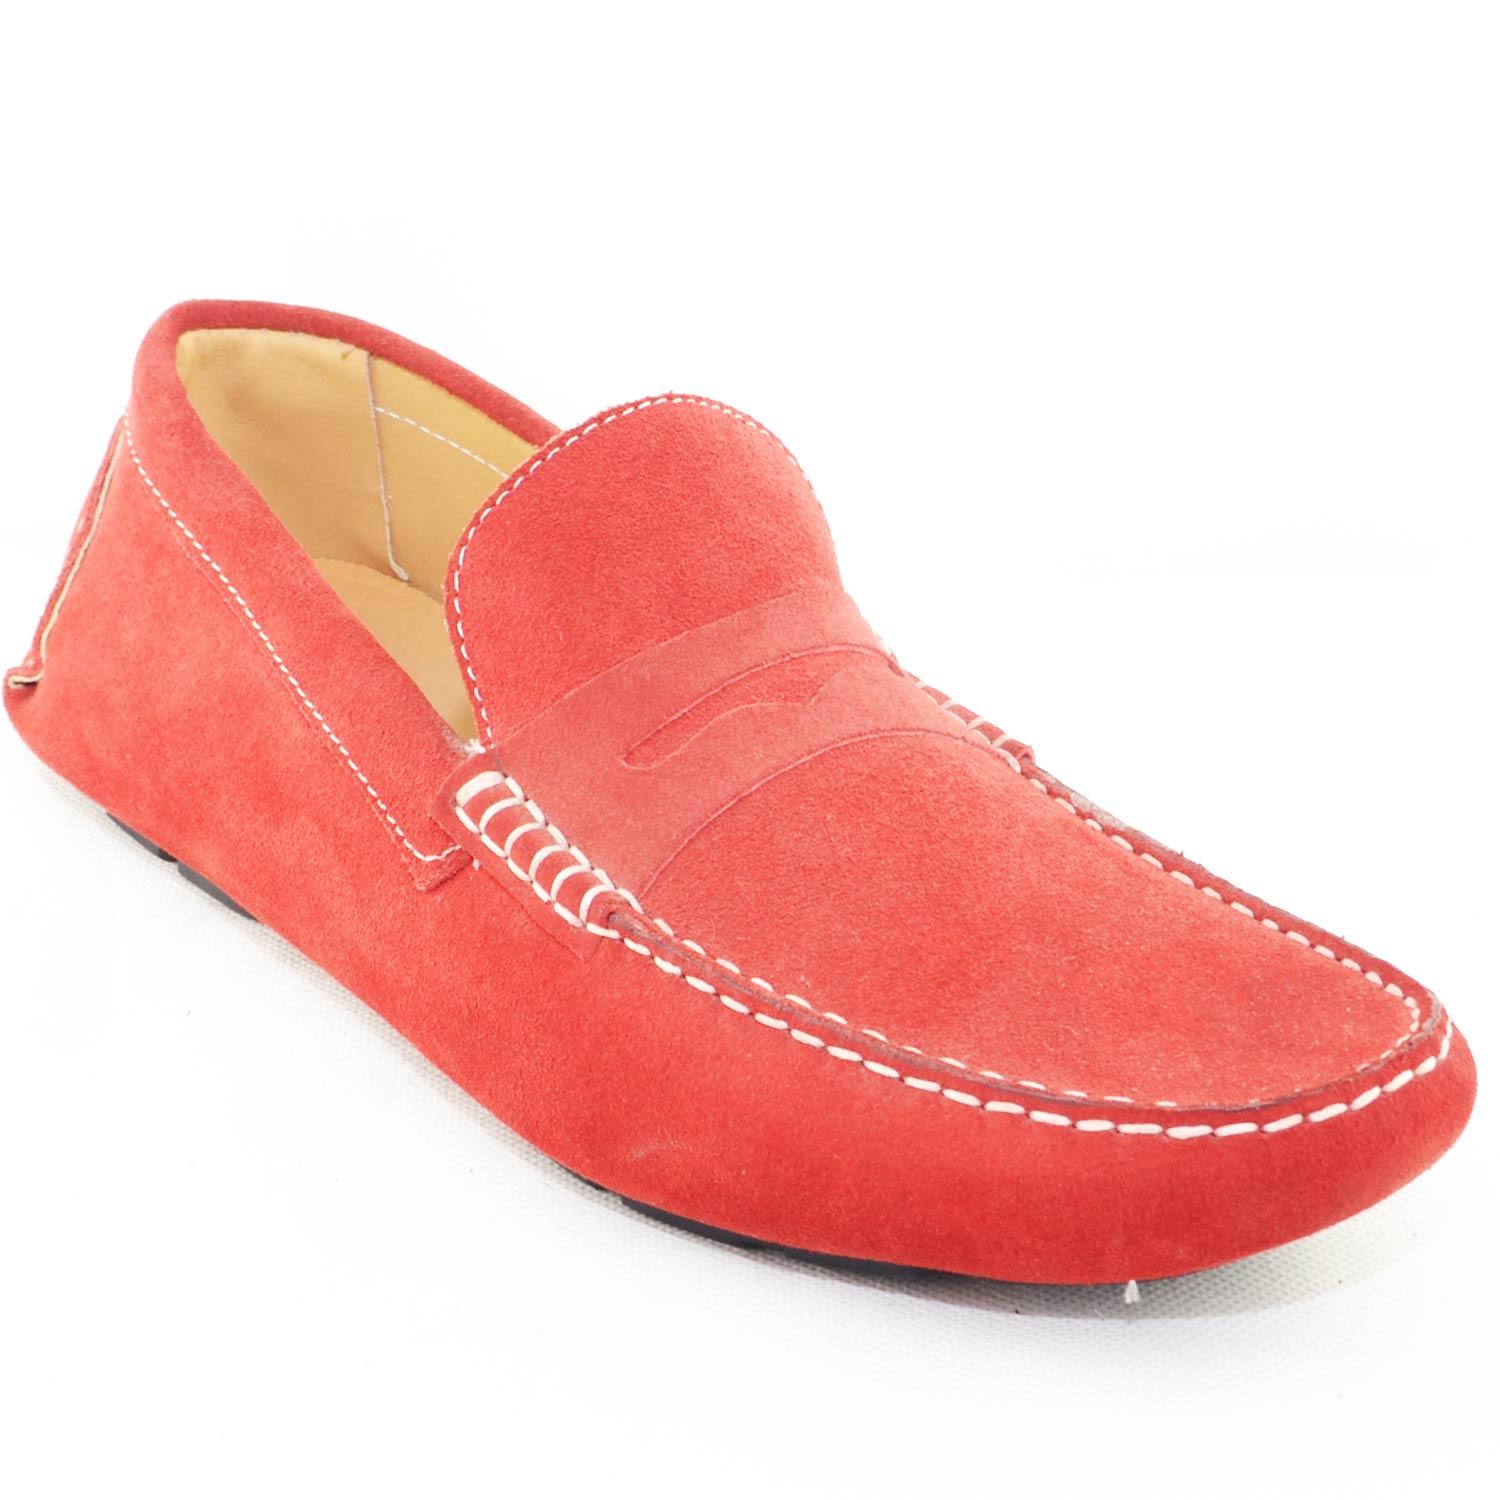 mocassino car shoes uomo rosso comfort man casual made in italy vera pelle fondo antiscivolo moda estiva.